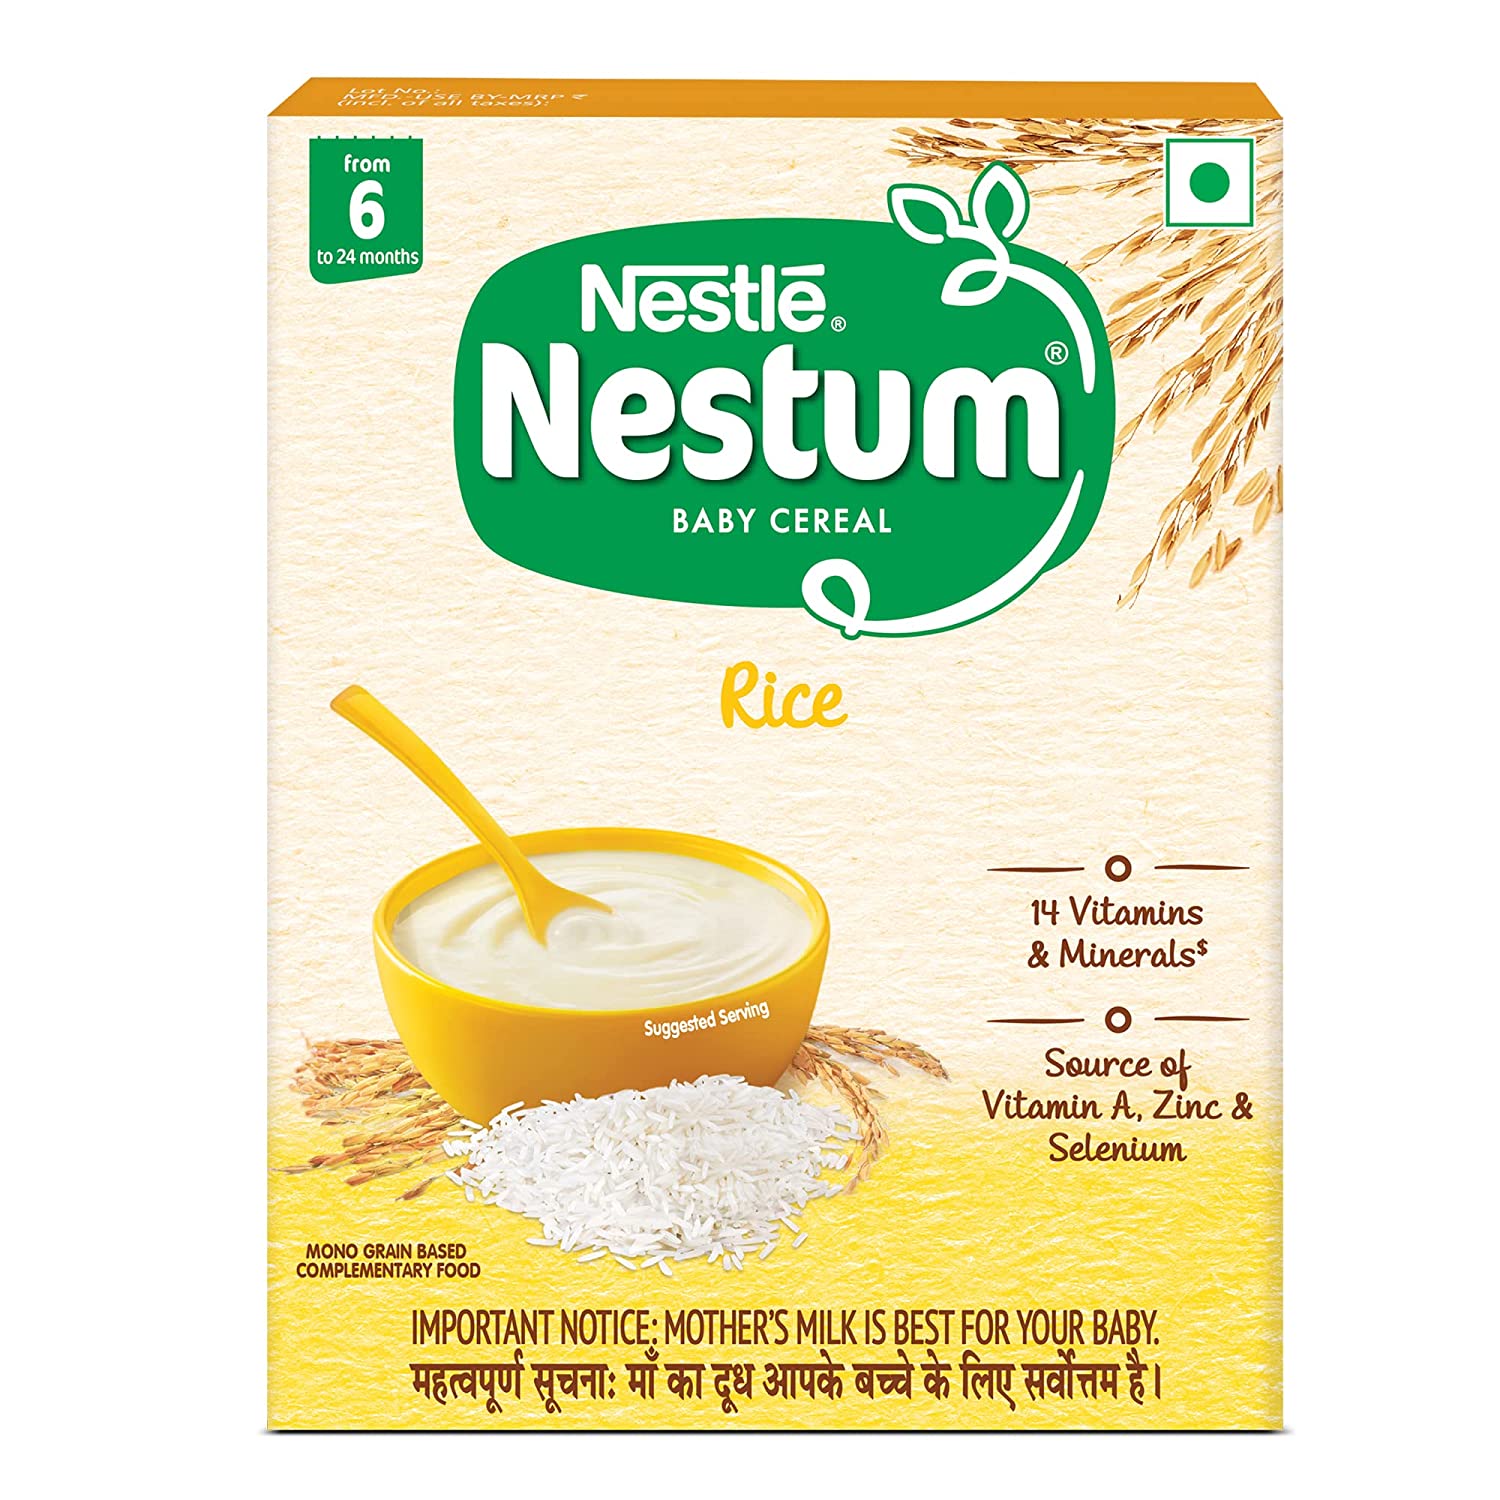 Nestle Nestum Baby Cereal